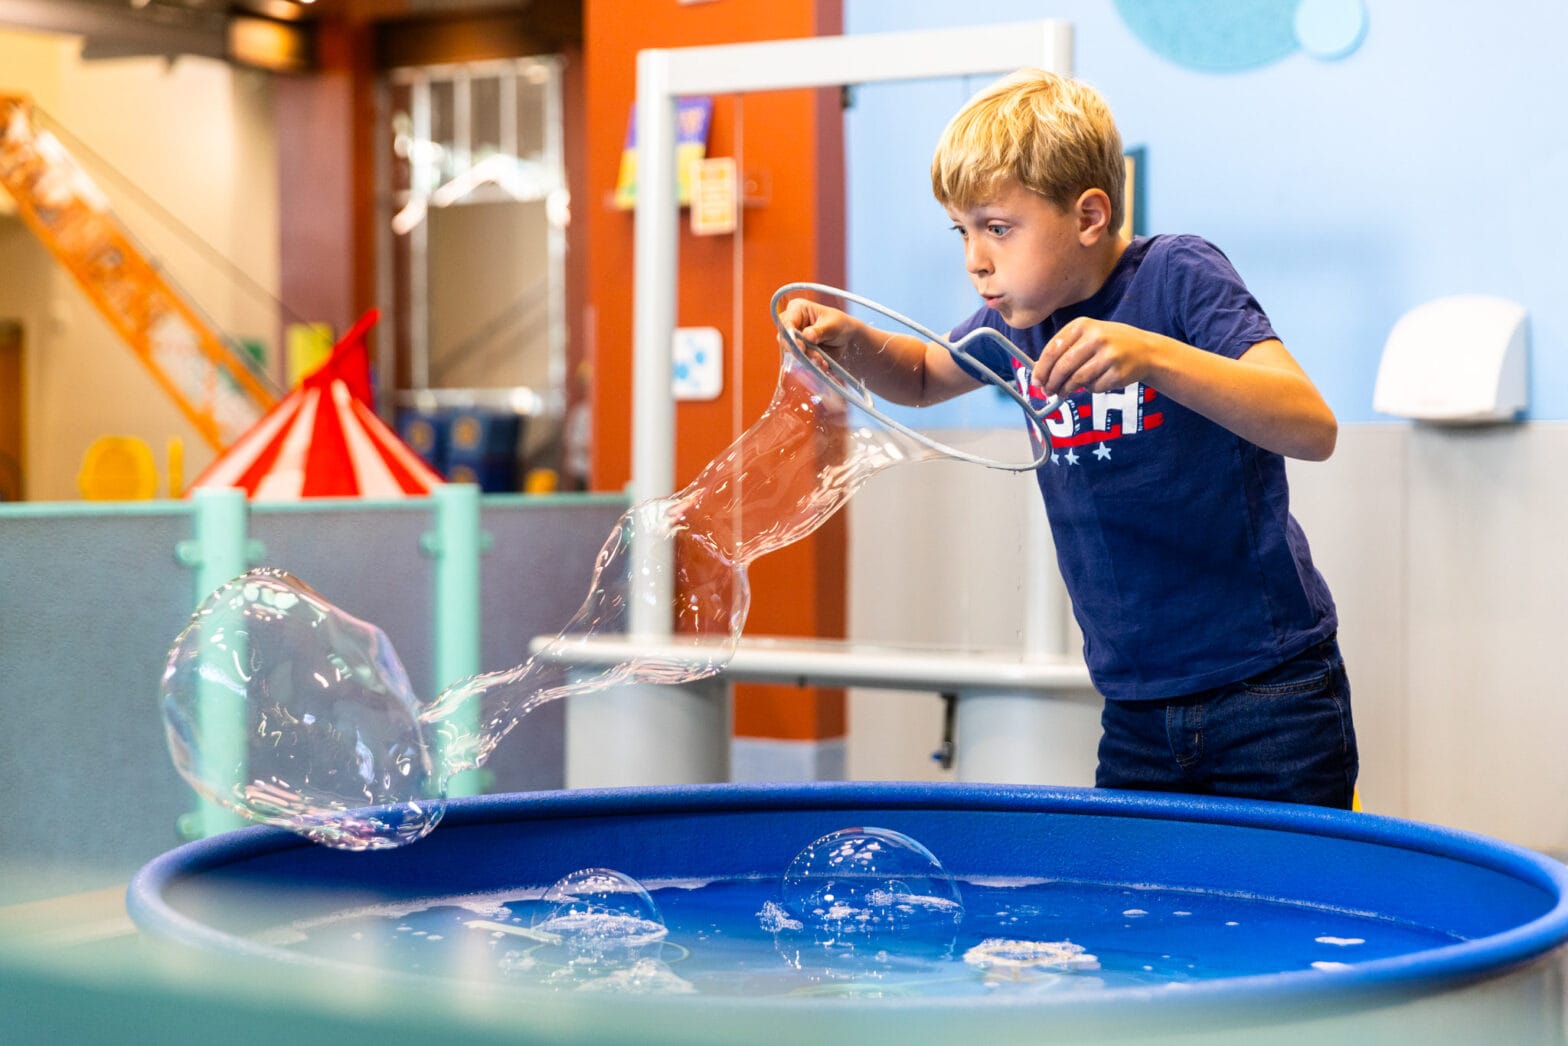 A little boy blowing bubbles in the bubble pool